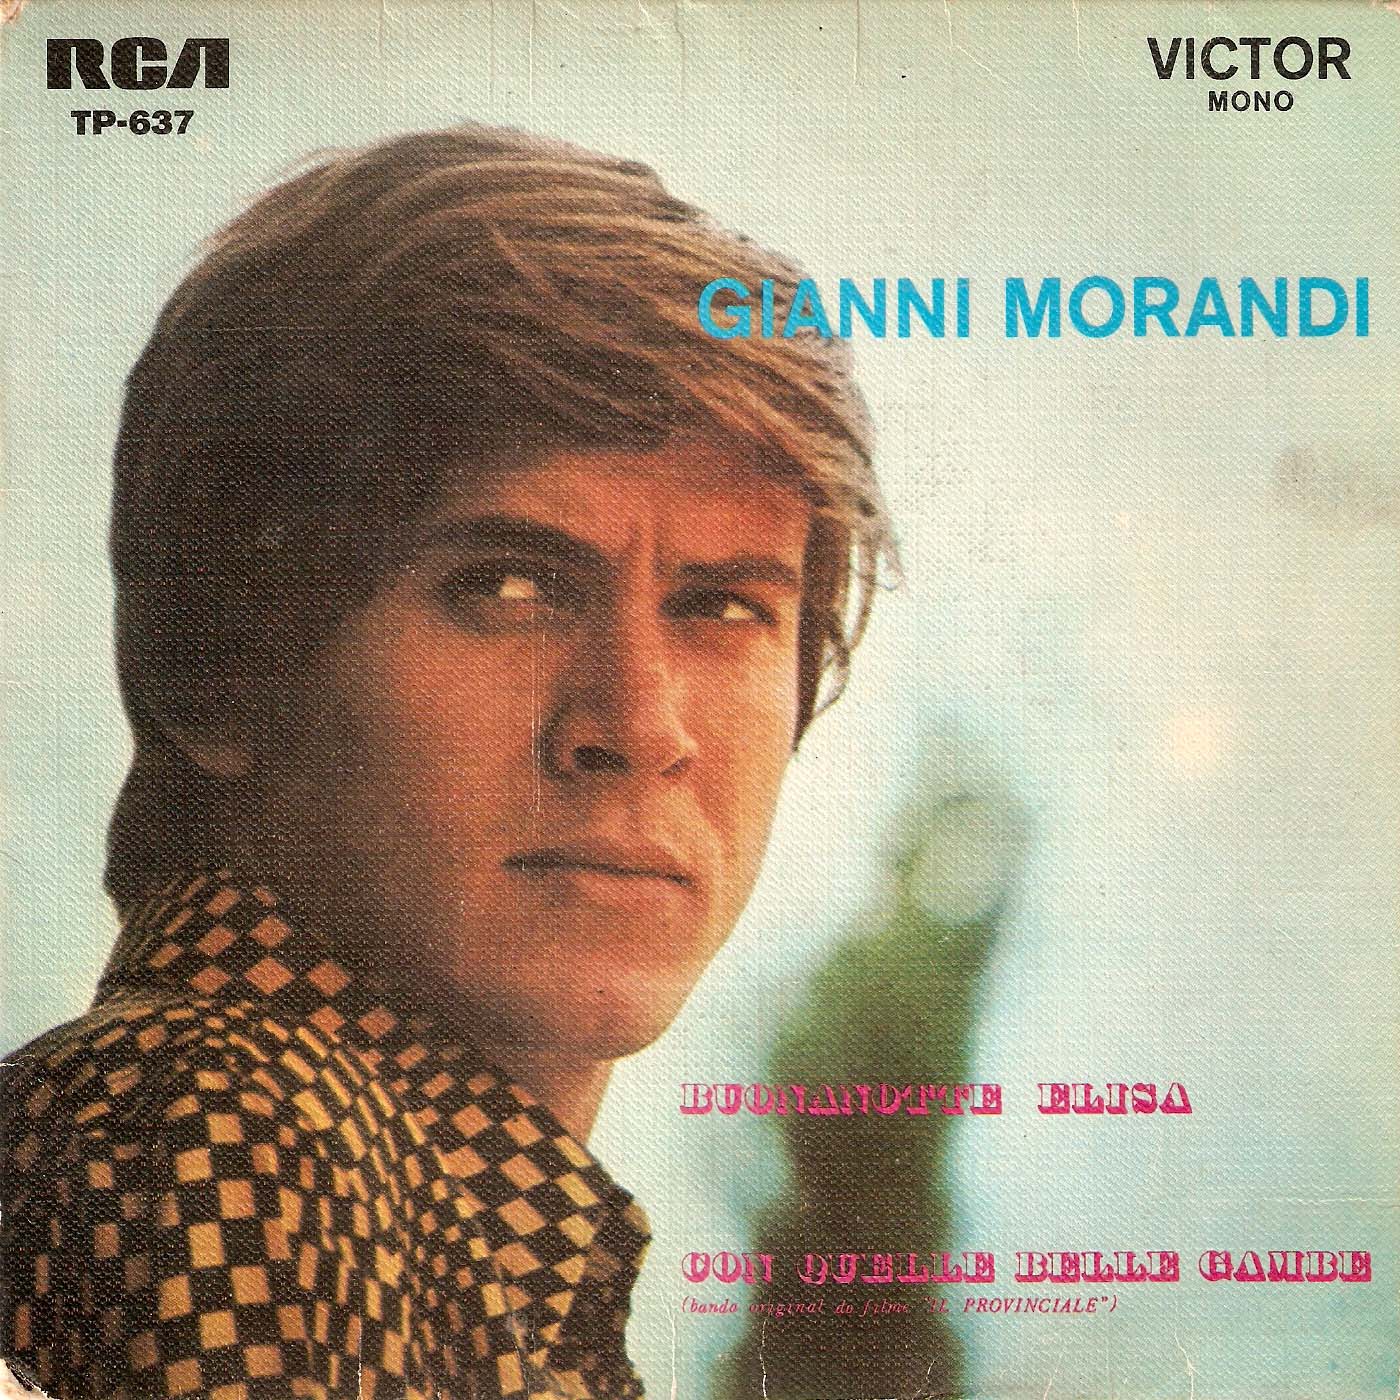 Classify Italian singer Gianni Morandi